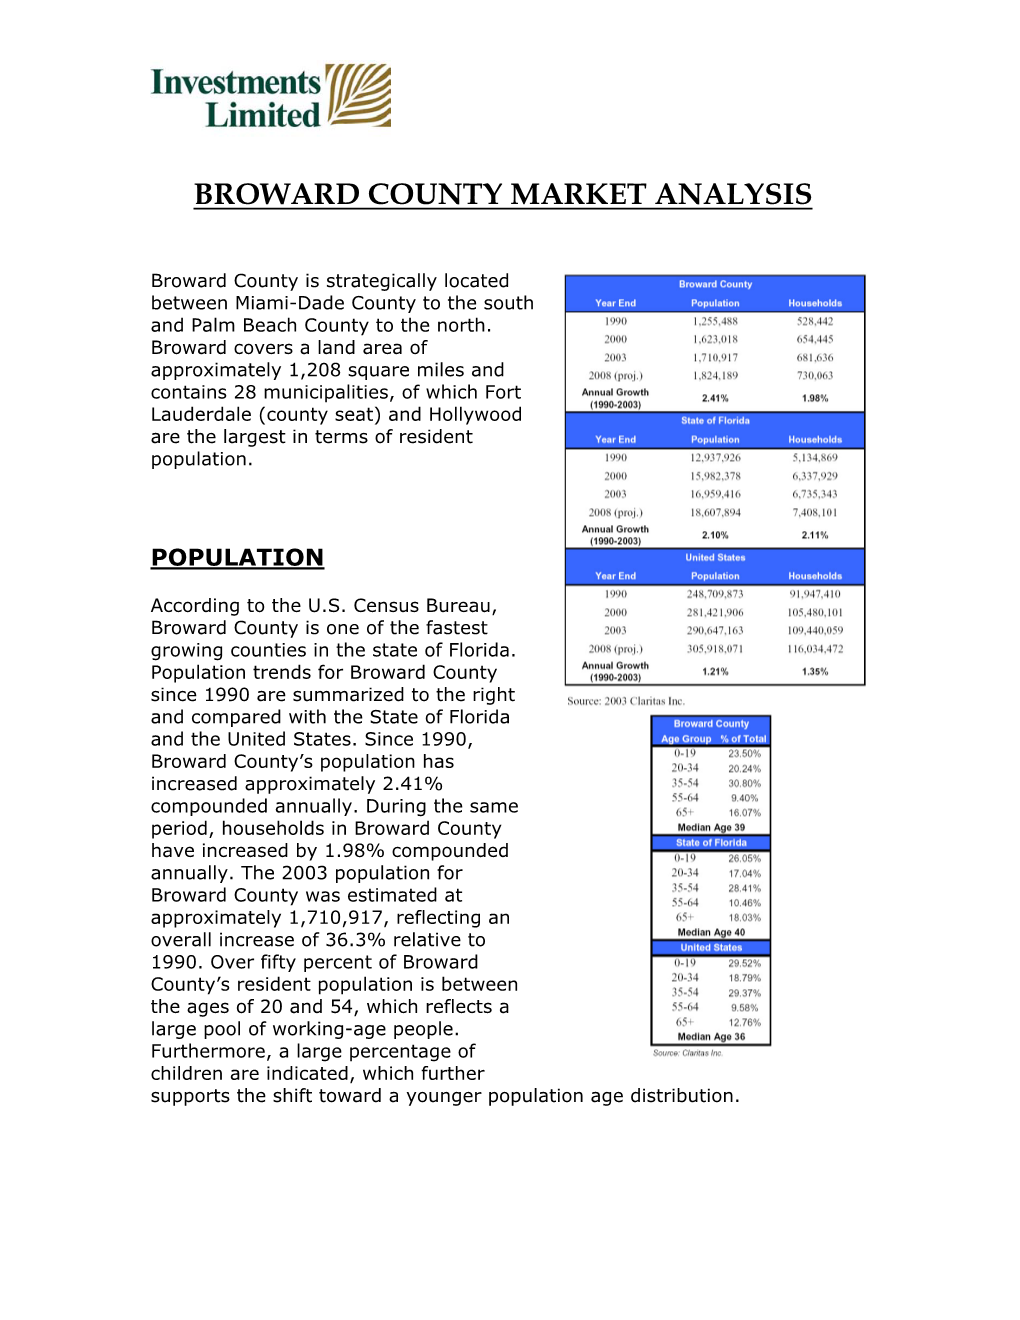 Broward County Analysis